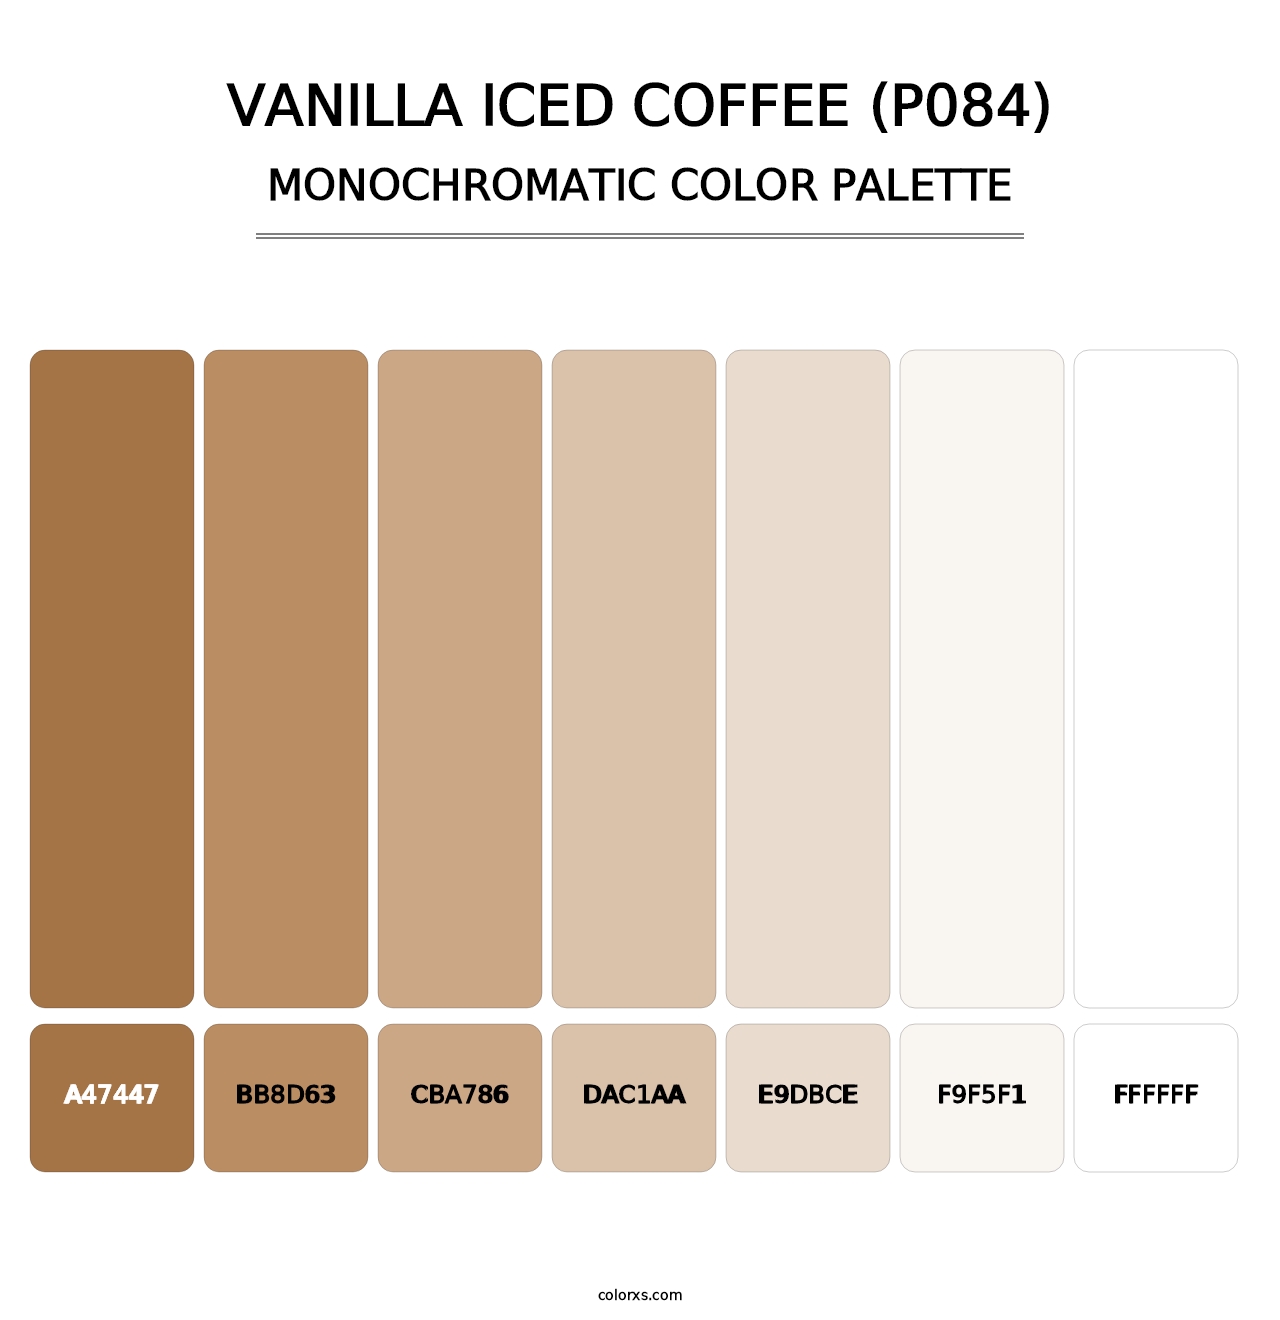 Vanilla Iced Coffee (P084) - Monochromatic Color Palette